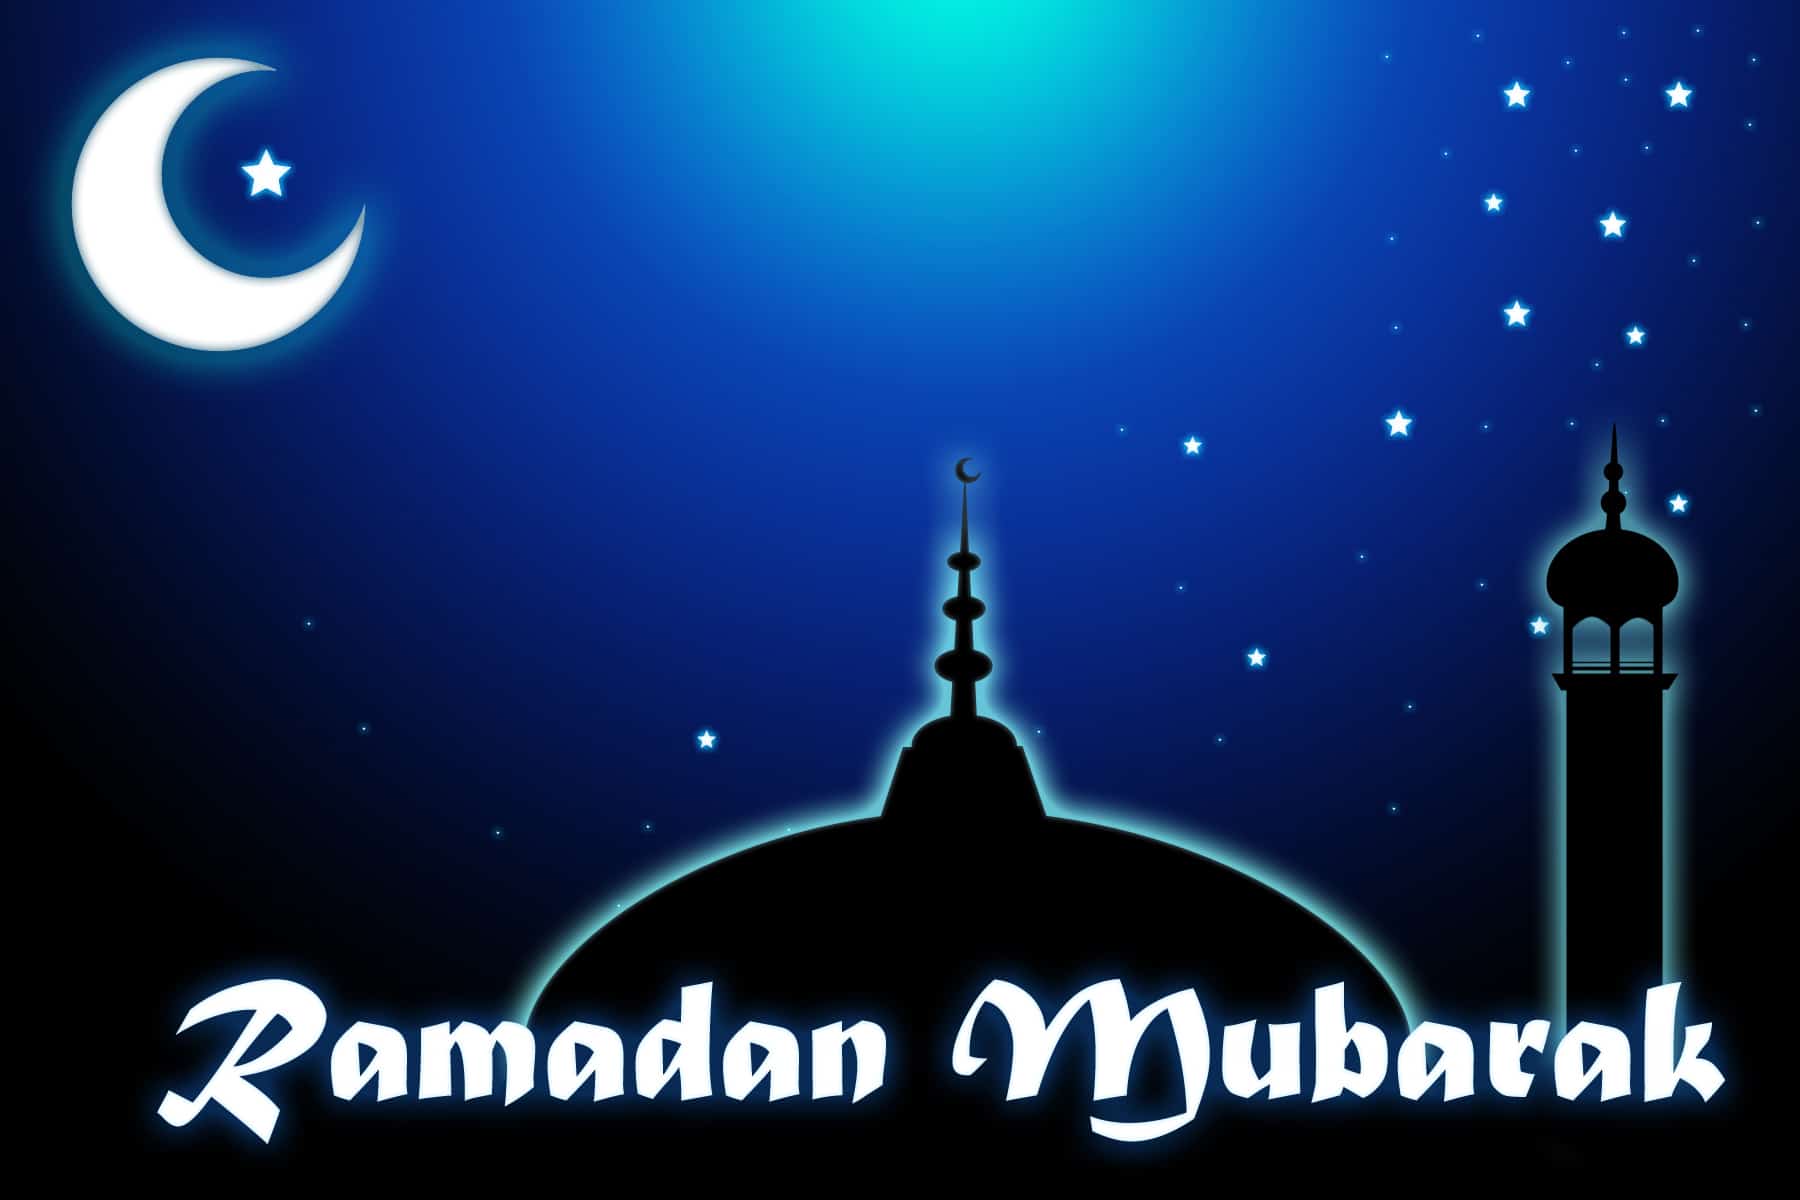 Ramadan Quotes